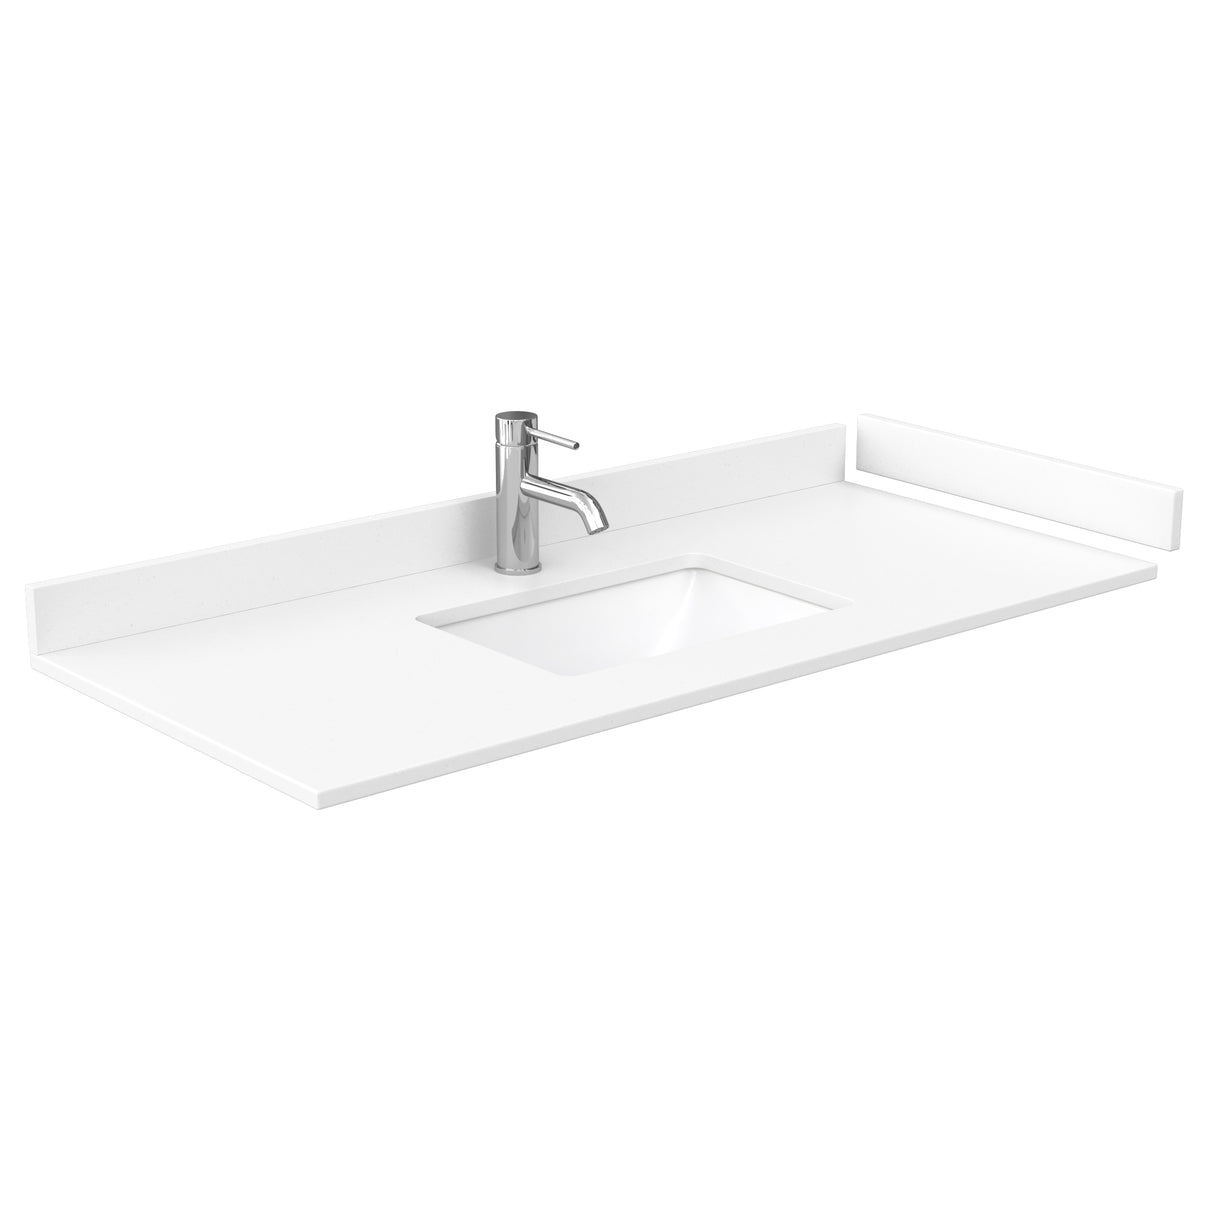 Strada 48 Inch Single Bathroom Vanity in White White Cultured Marble Countertop Undermount Square Sink Matte Black Trim